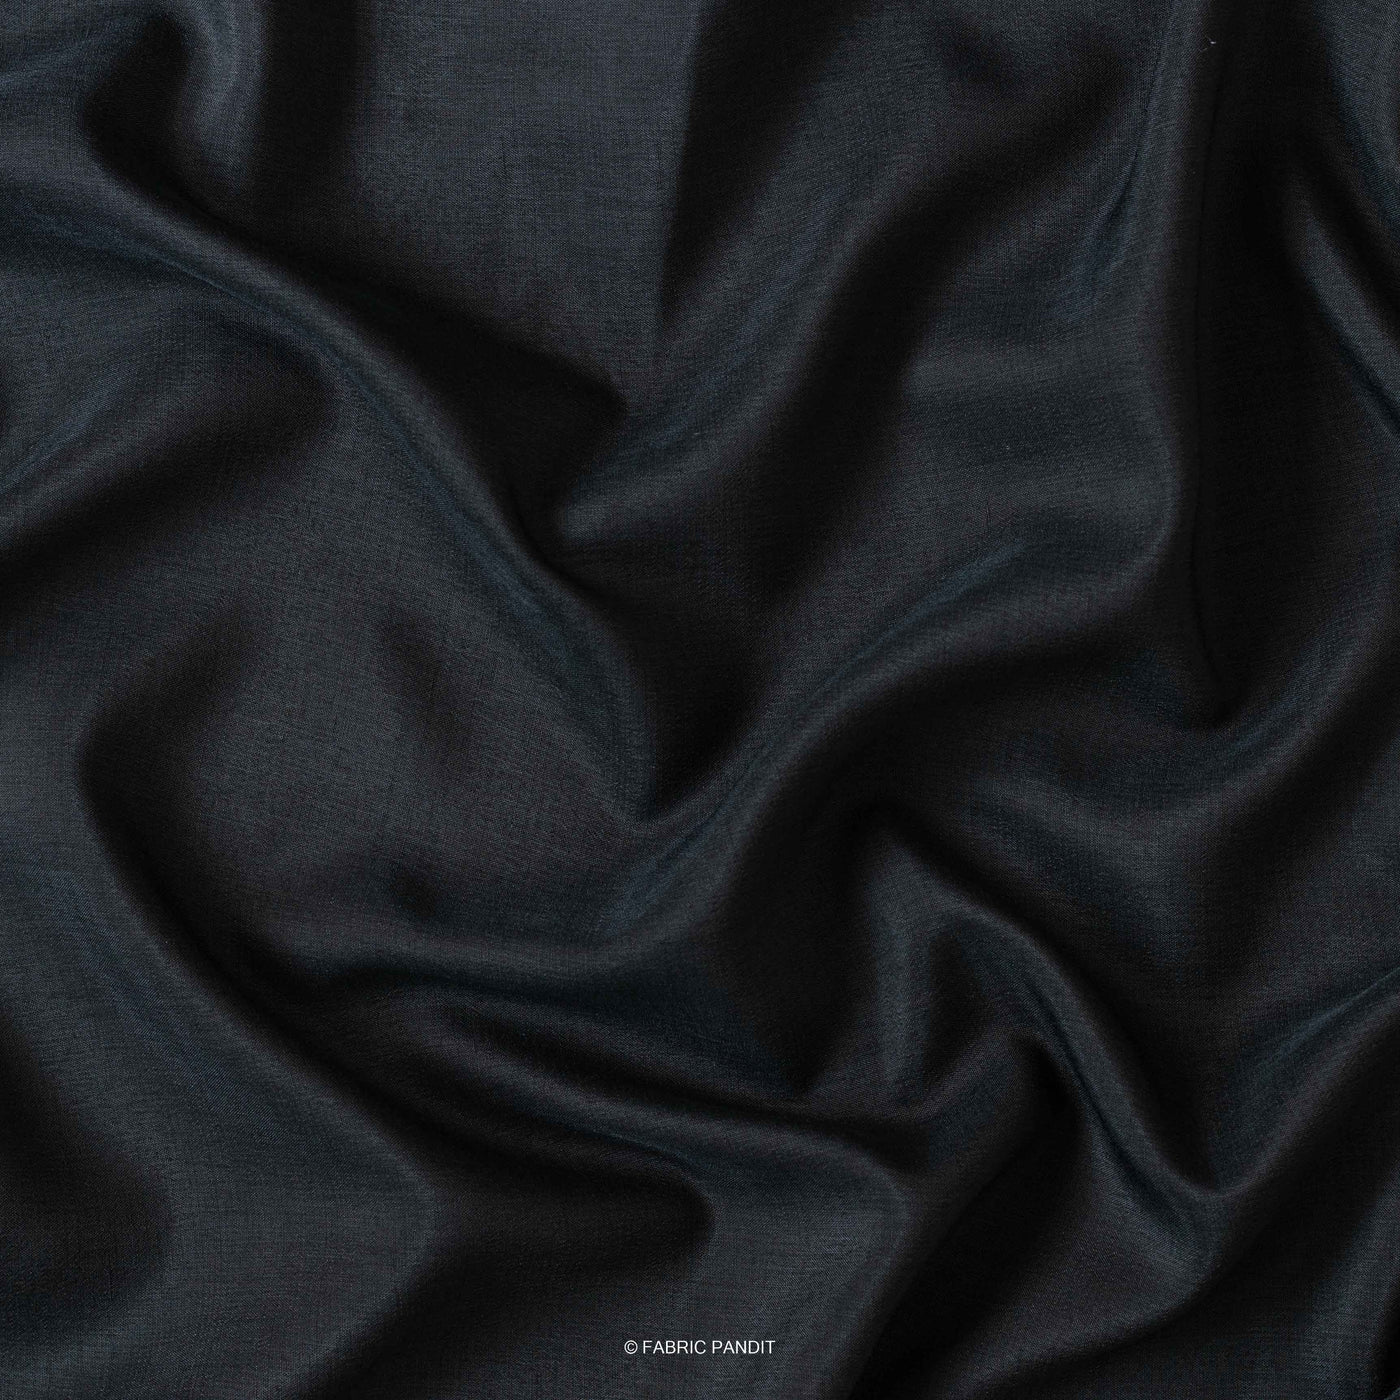 Fabric Pandit Fabric Midnight Black Plain Soft Poly Muslin Fabric (Width 44 Inches)